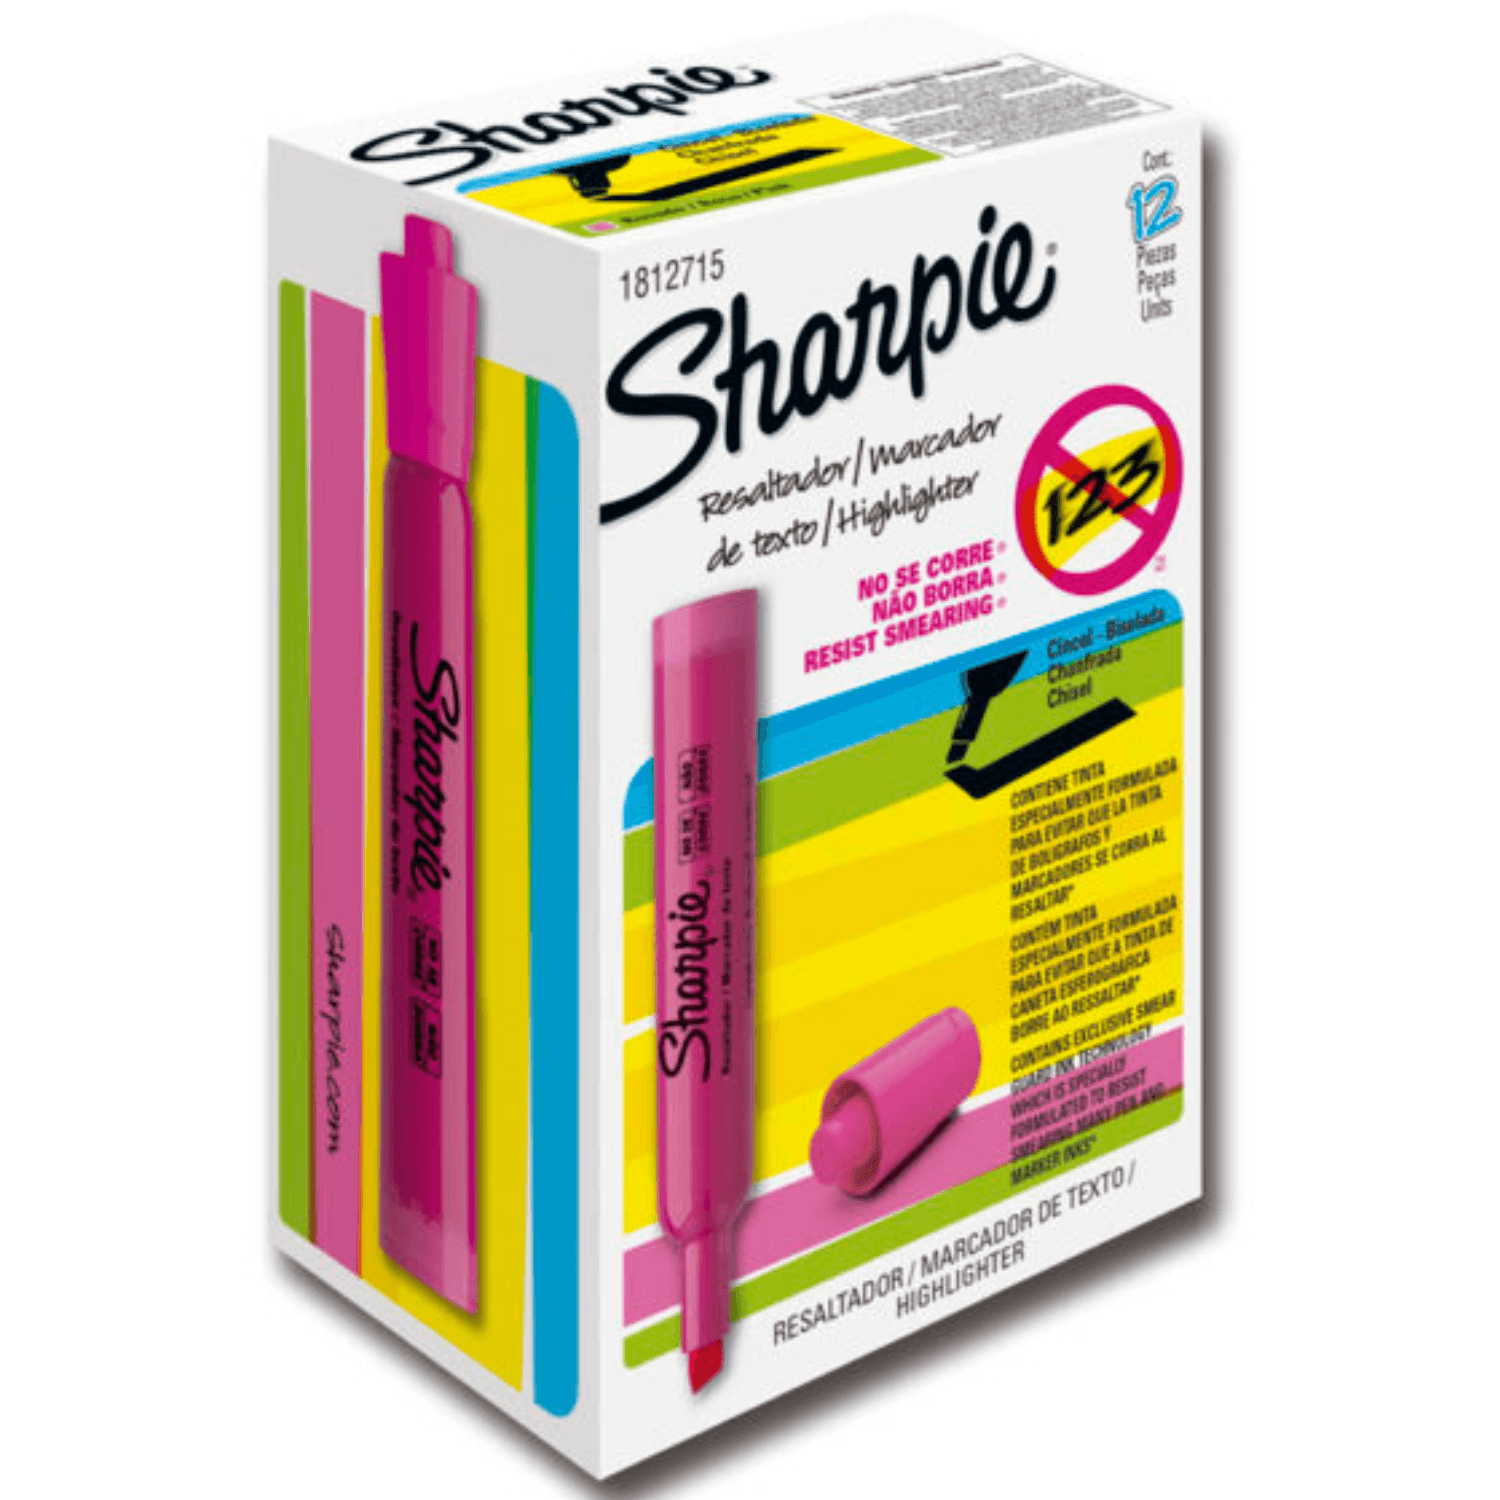  Sharpie Accent subrayador bolsillo estilo., Amarillo  fluorescente 36 - unidades : Productos de Oficina